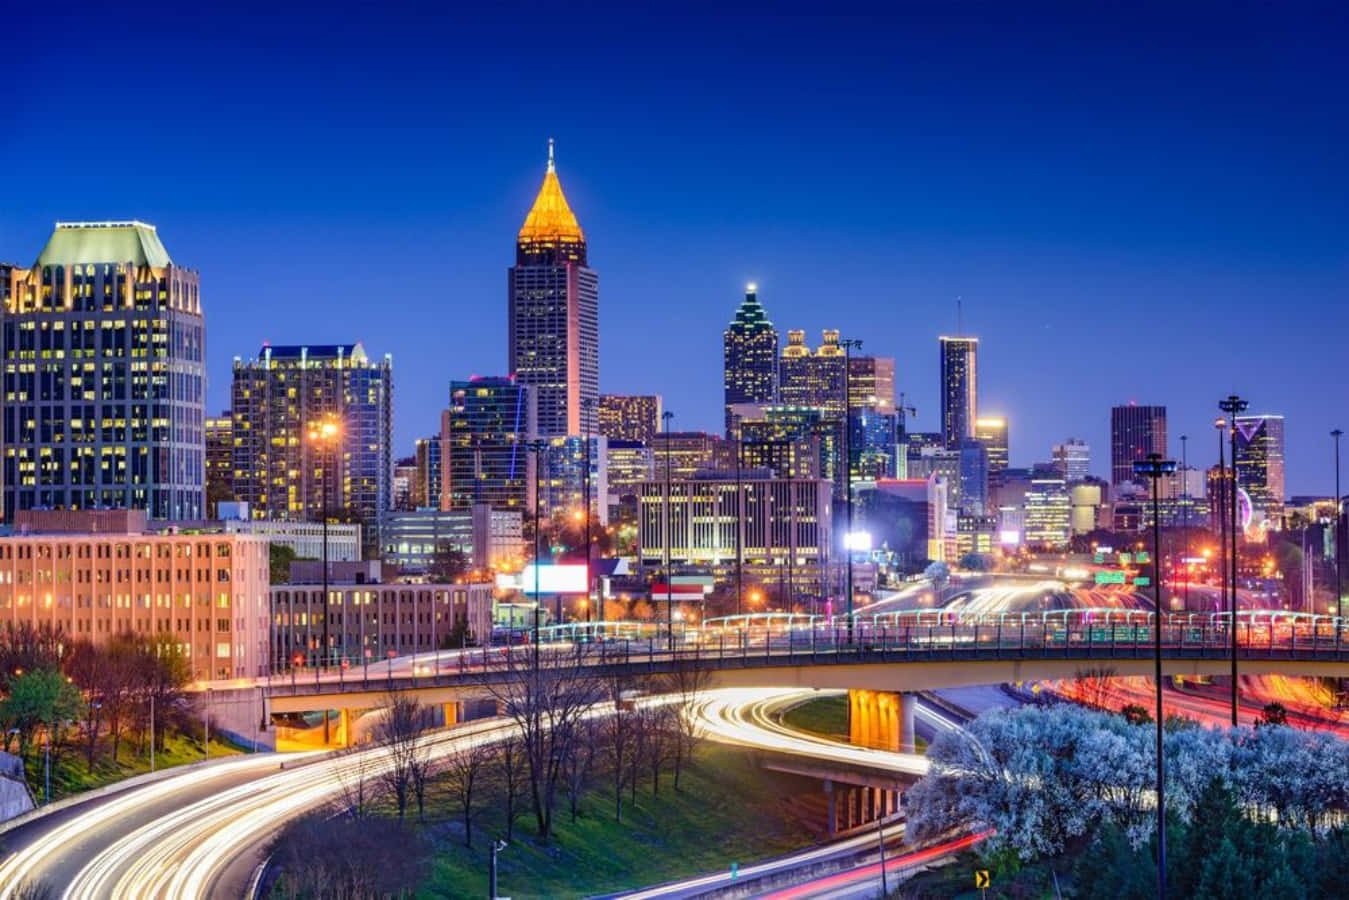 Feel the pulse of Atlanta's famous skyline